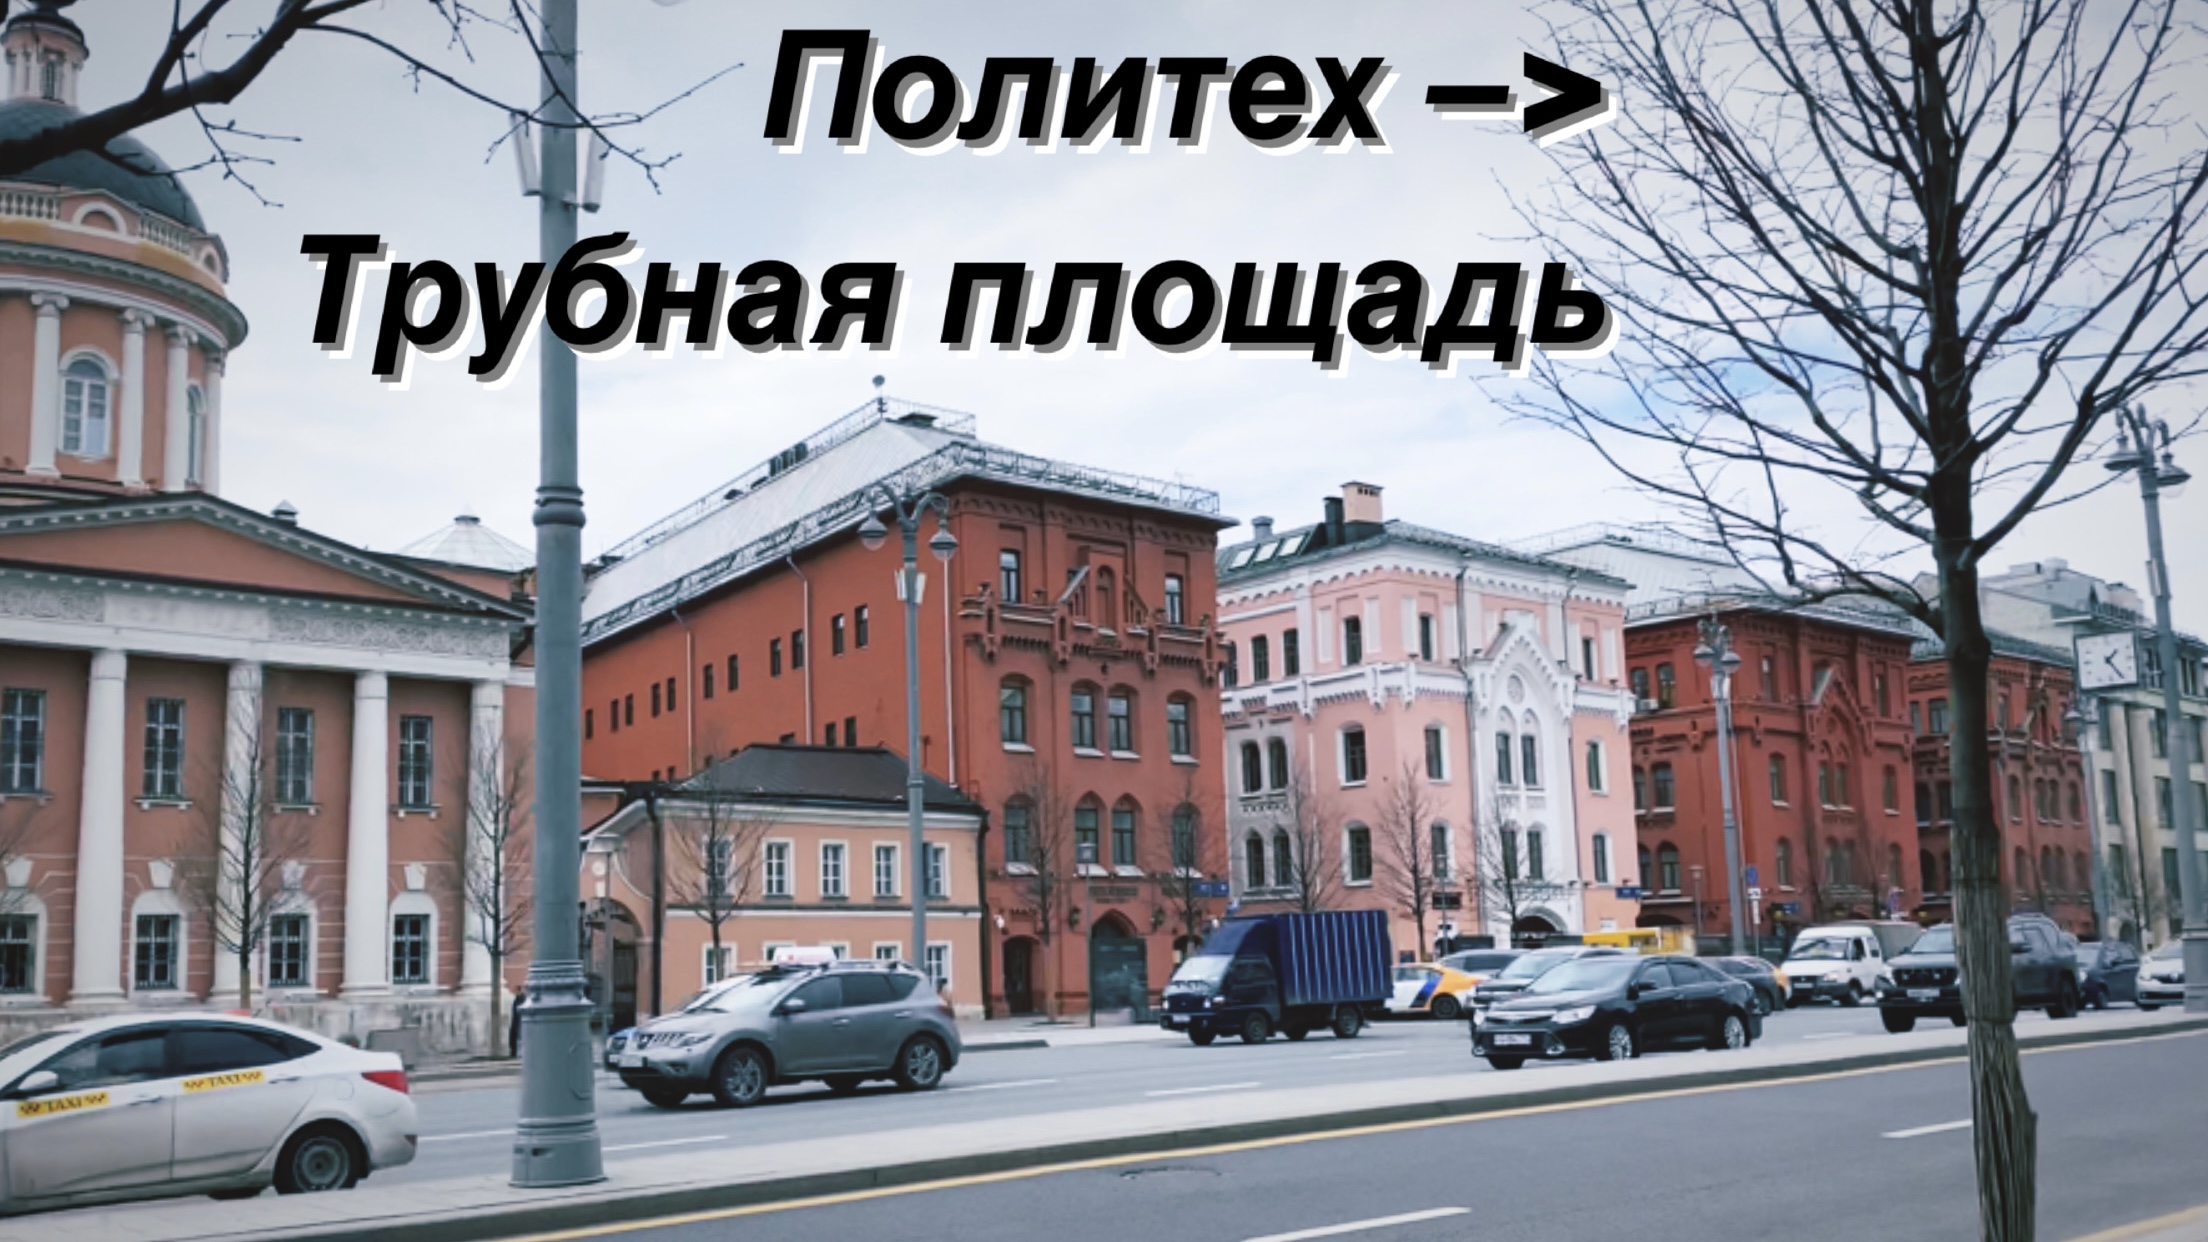 Прогулка от Политеха до Трубной площади / Promenade (Walk): Polytech Museum to Troobnaya square